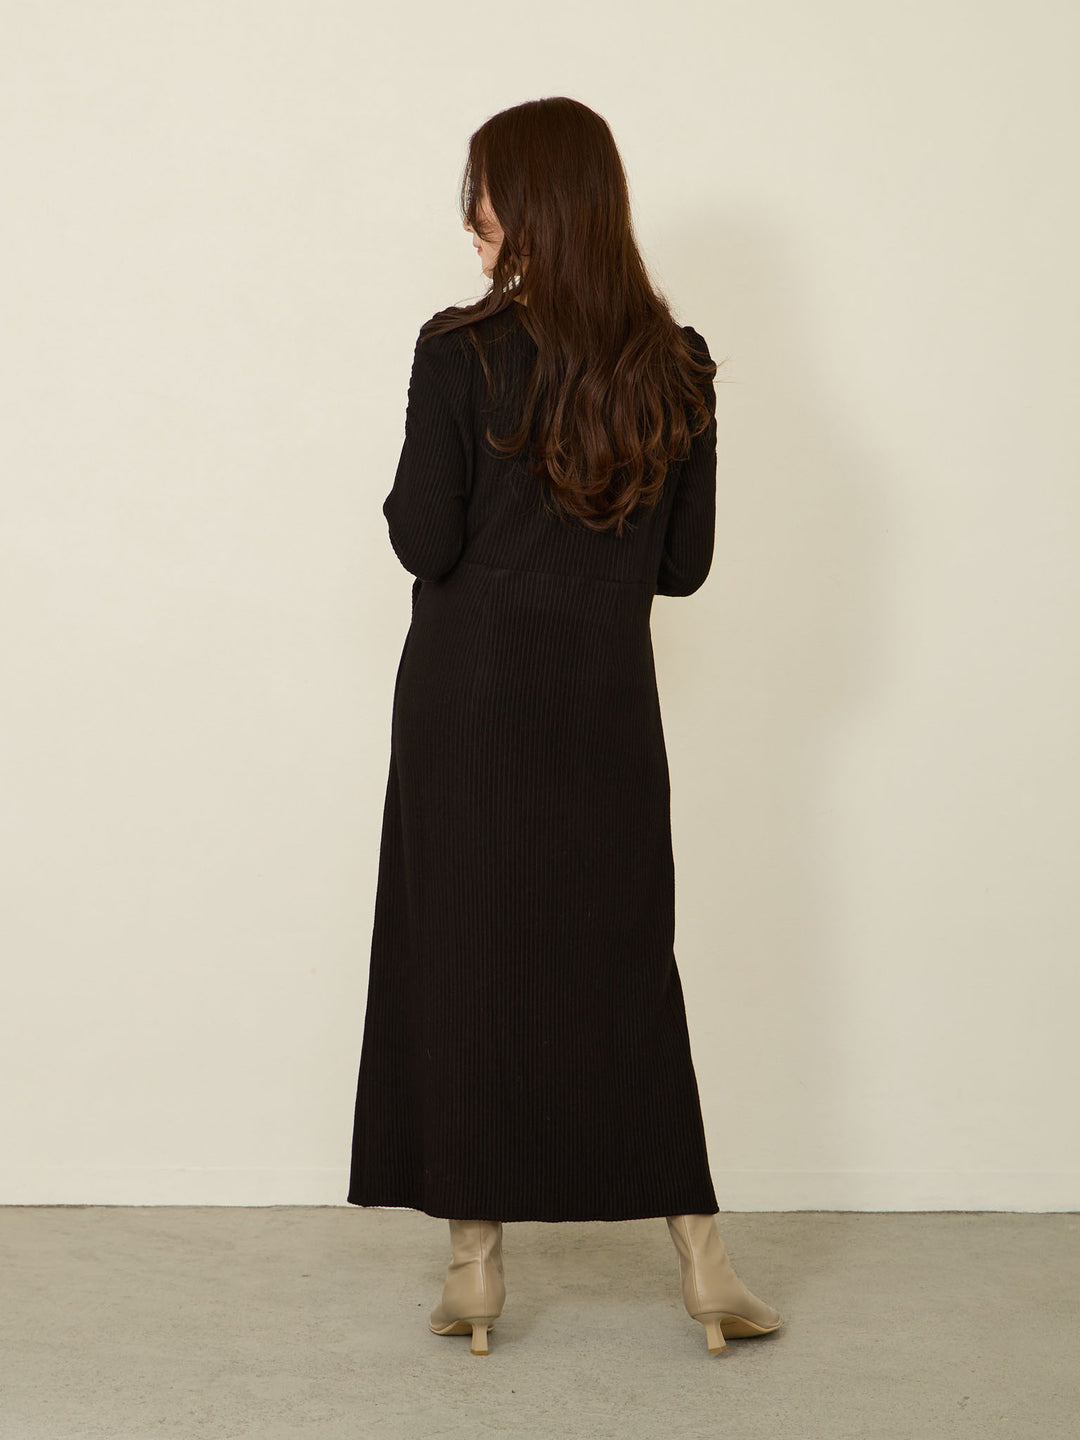 [Maternity/nursing clothes] Power shoulder knit dress Black